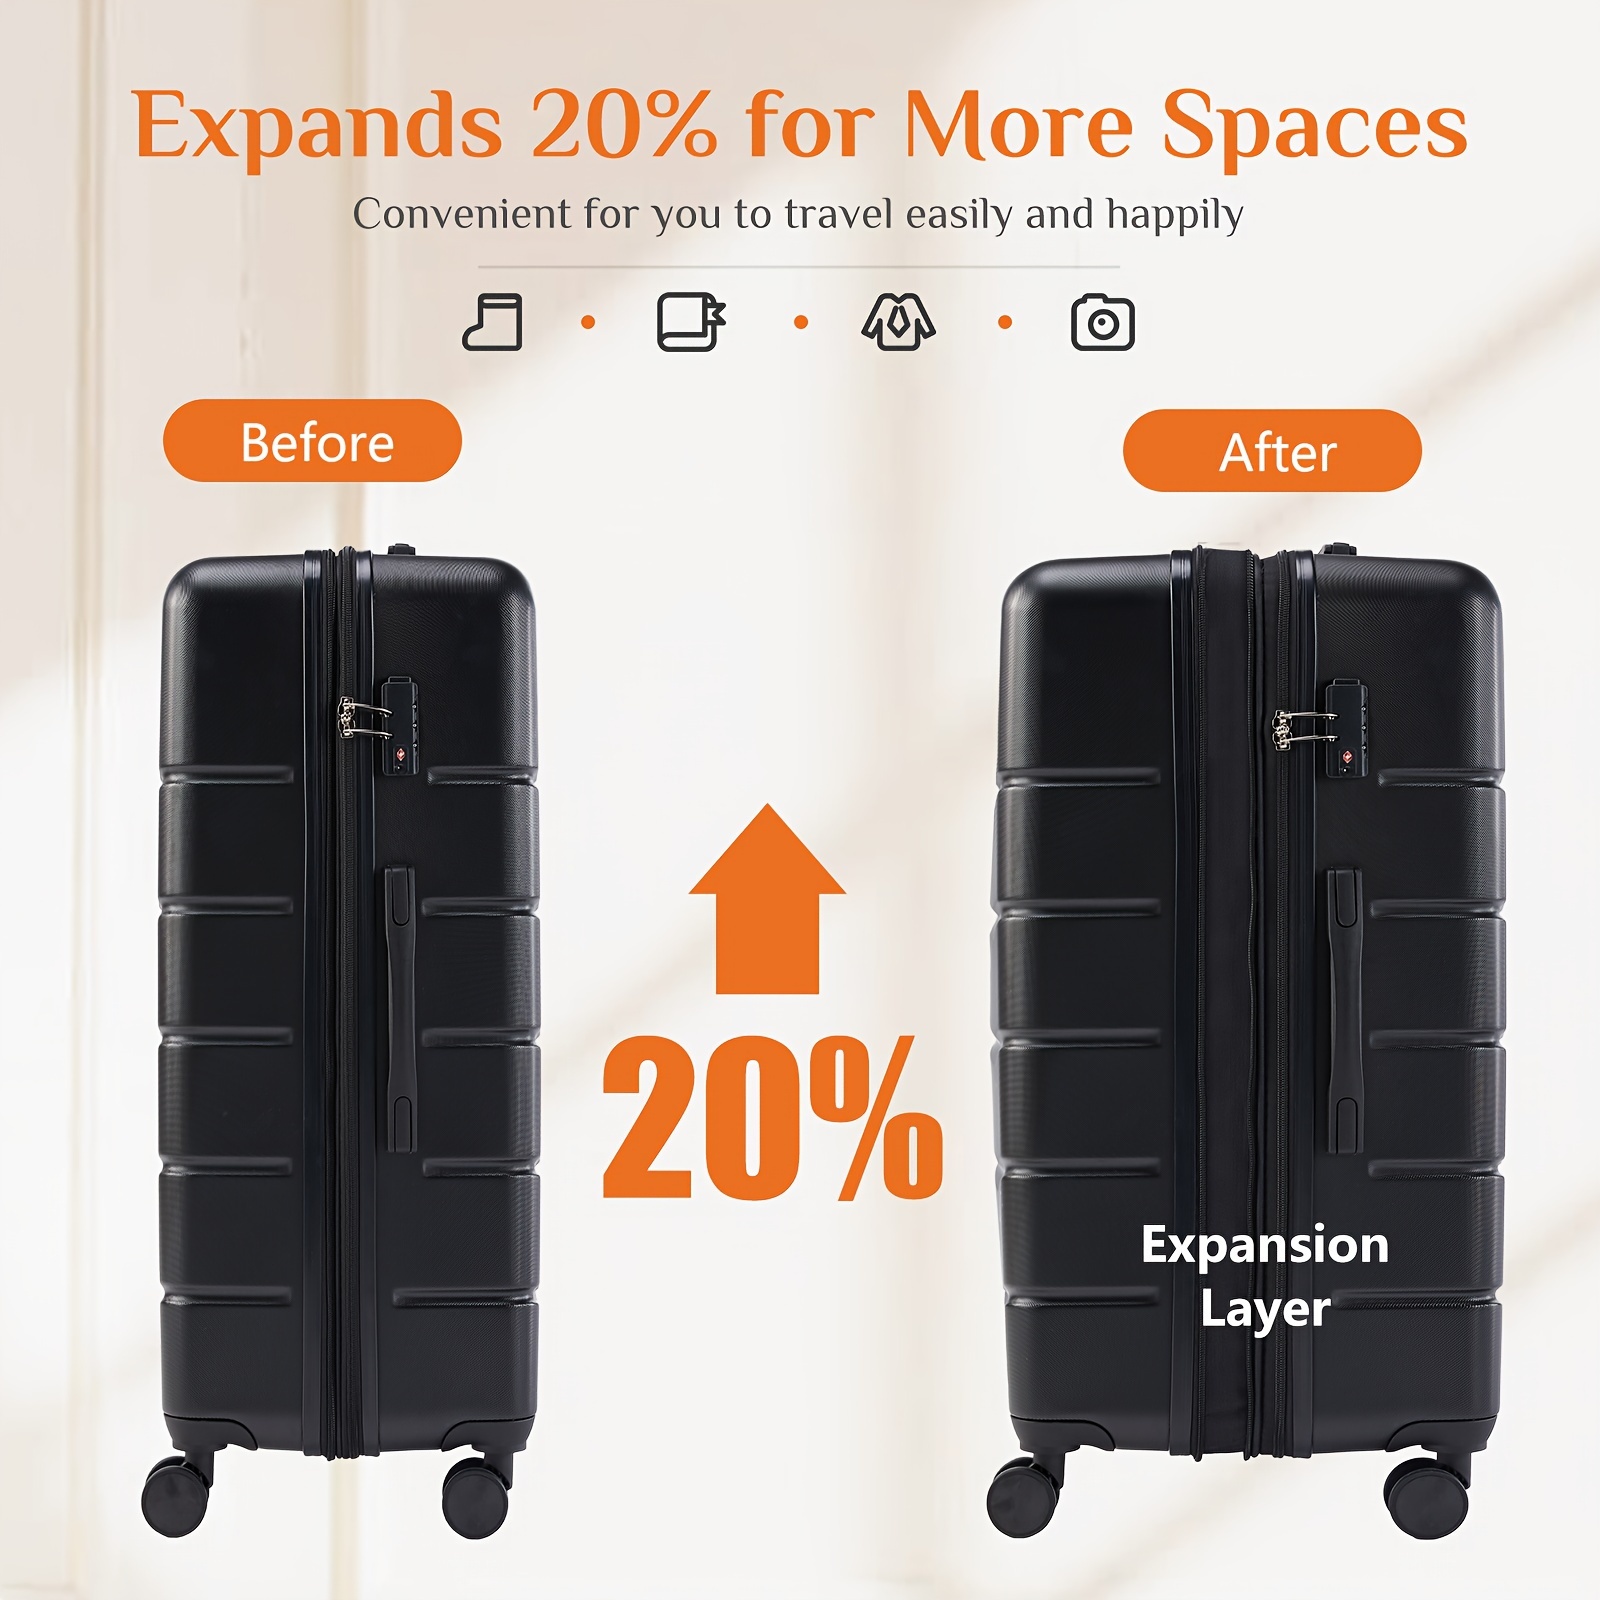 

Luggage, Multi-functional Interior, 3 Level Telescoping Handles, Tsa Combination Lock, Travel With Ease